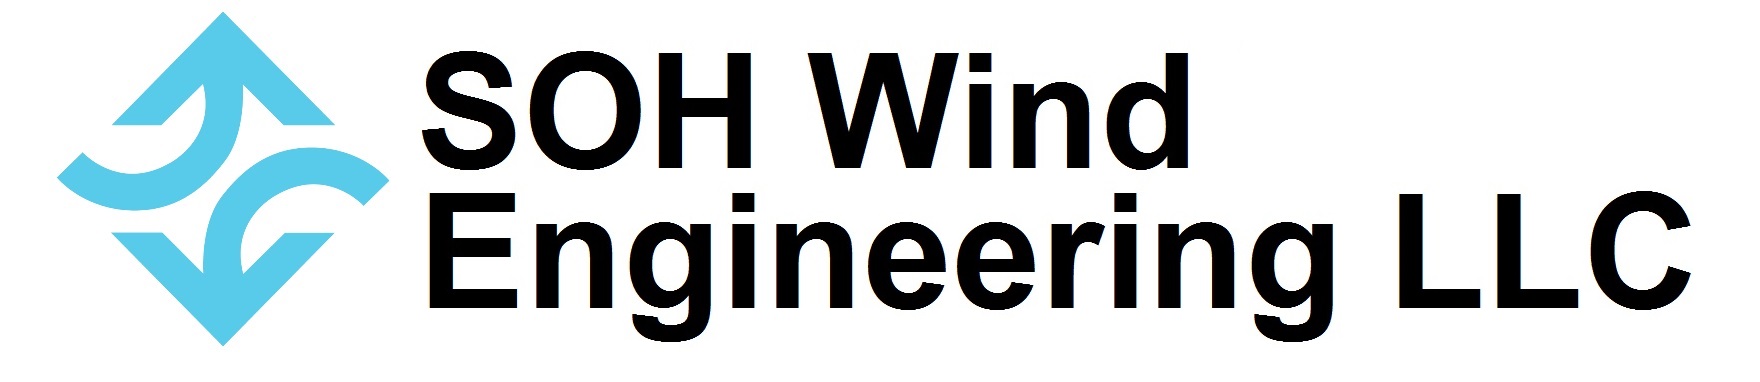 SOH Wind Engineering LLC